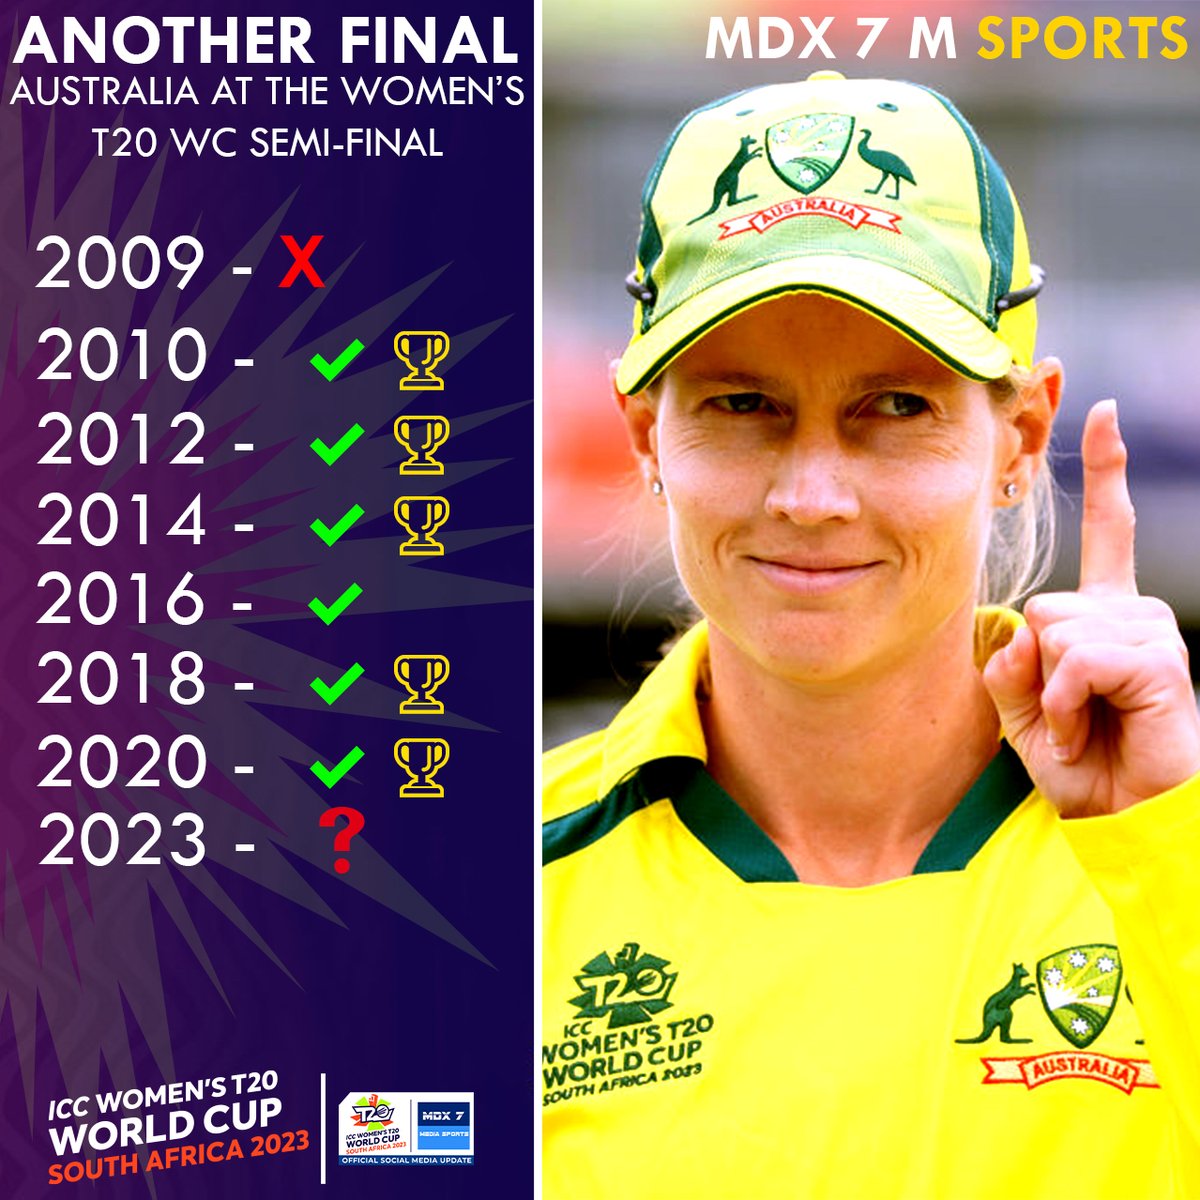 WOW, 7️⃣TH CONSECUTIVE T20 WORLD CUP FINAL! 

This team is beyond legendary 🔥 🏆

#MDX7MCricket | #TurnItUp | #T20WorldCup |  #AUSvIND | #CmonAussie | #Australia | #australiacricket